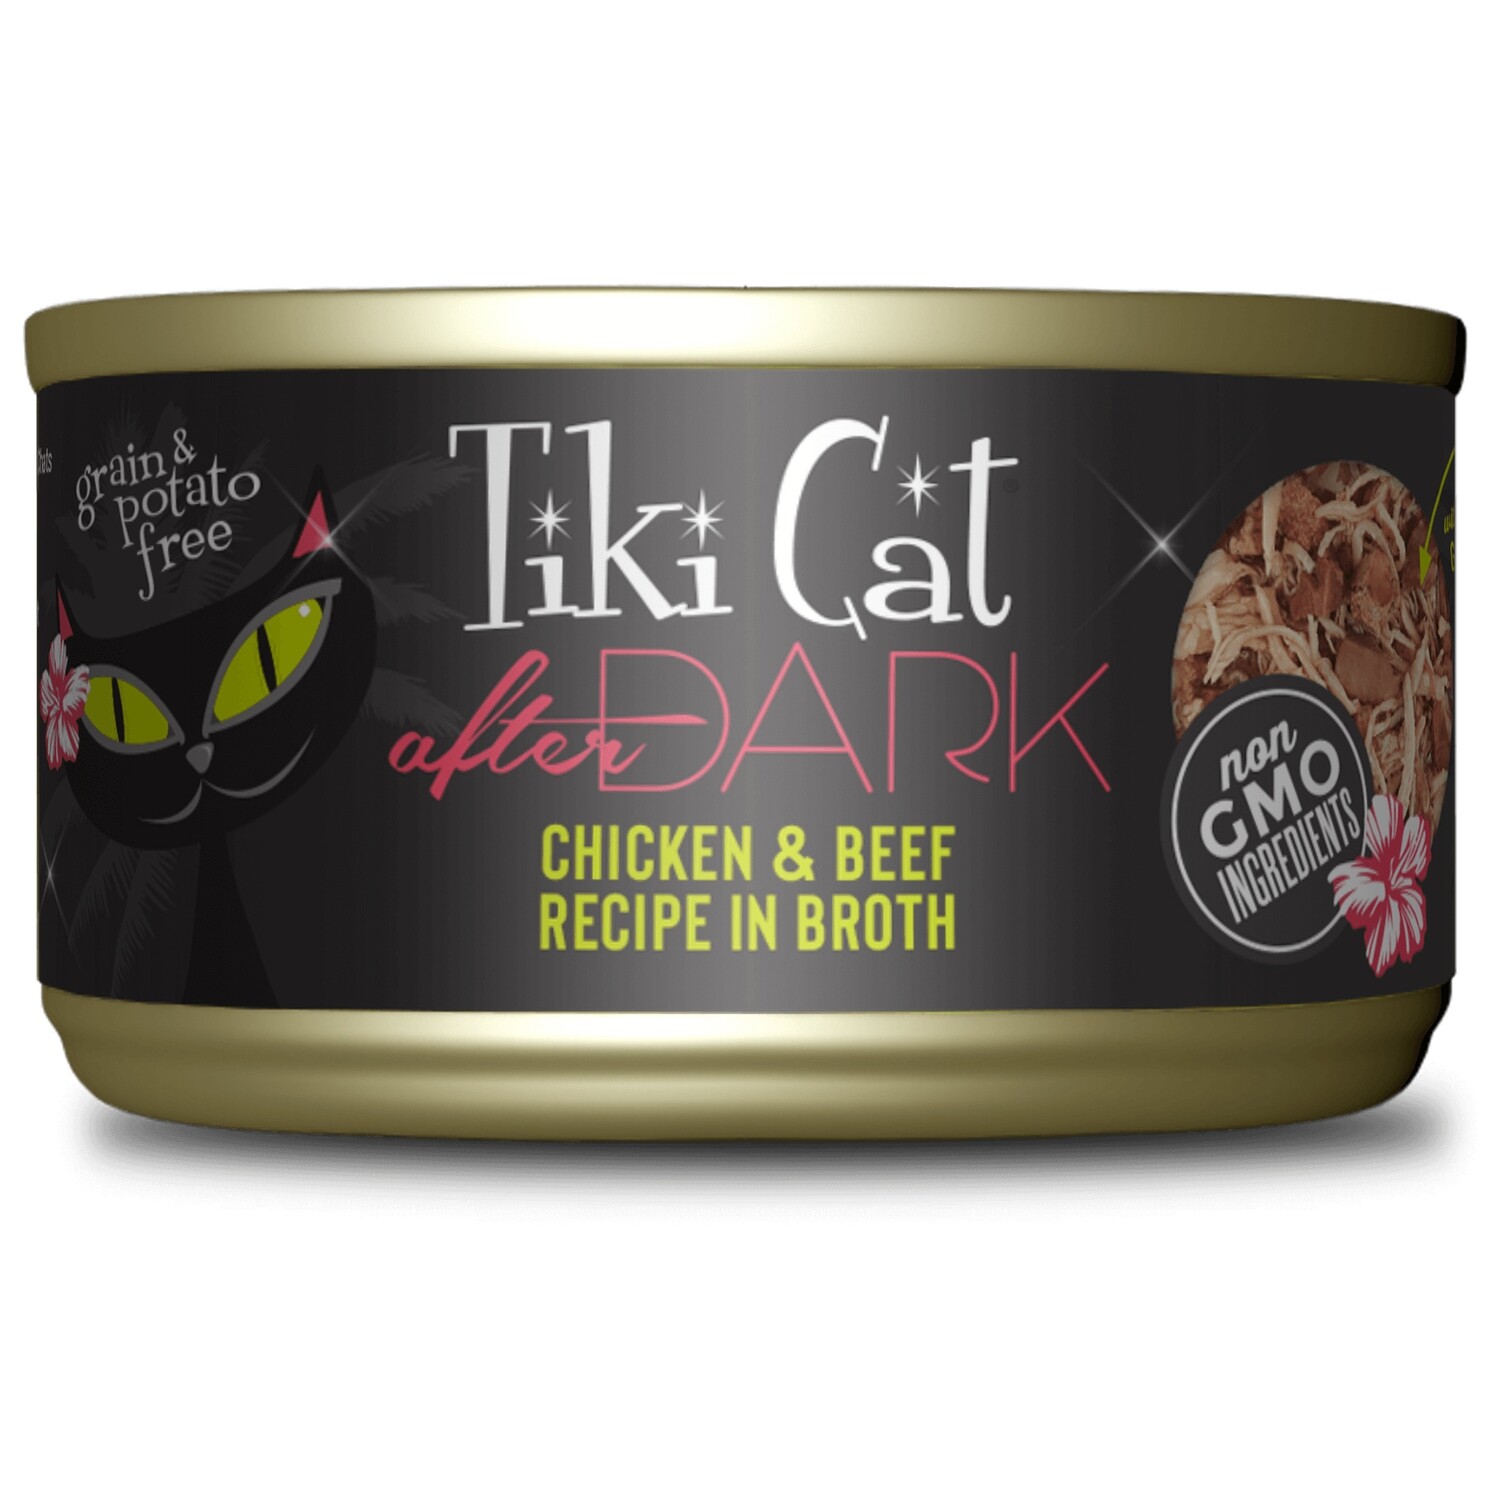 TikiCat After Dark Chicken & Beef  Recipe in Broth - 2.8oz